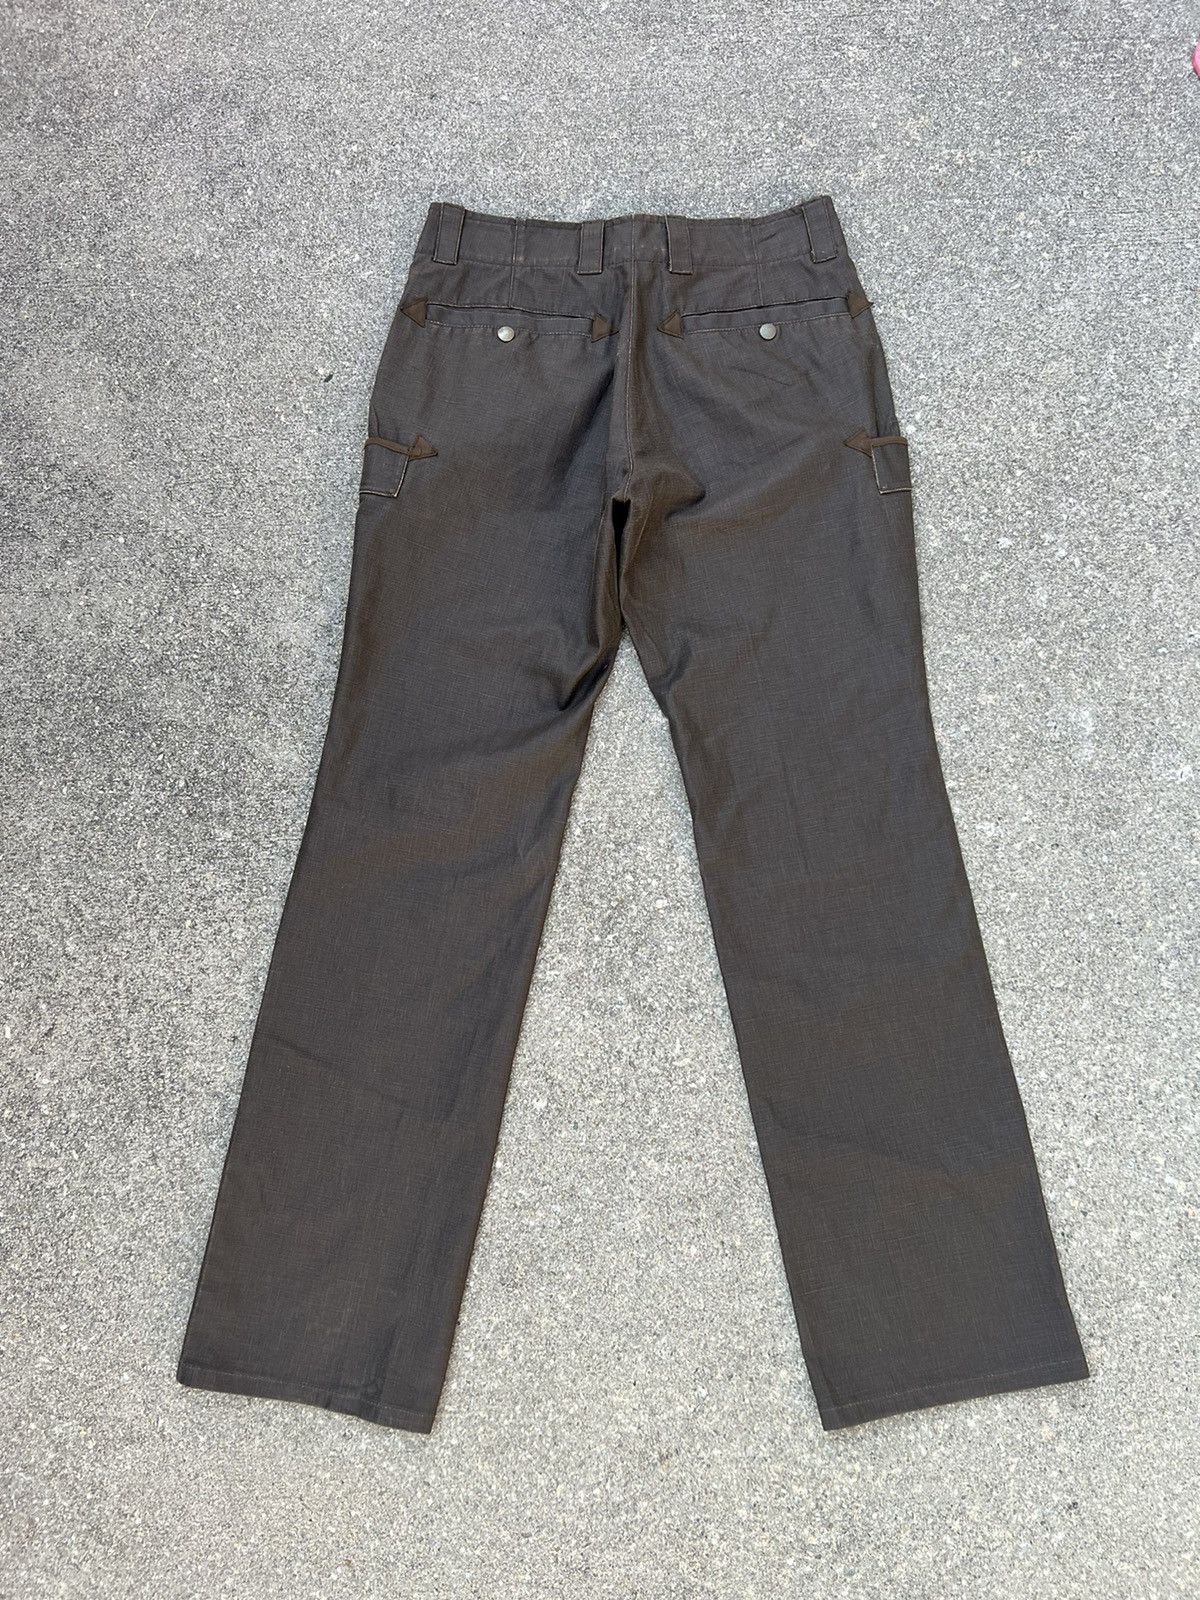 Matsuda Vintage MONSIEUR NICOLE Japan Waxed Westerner Pant Size US 30 / EU 46 - 2 Preview